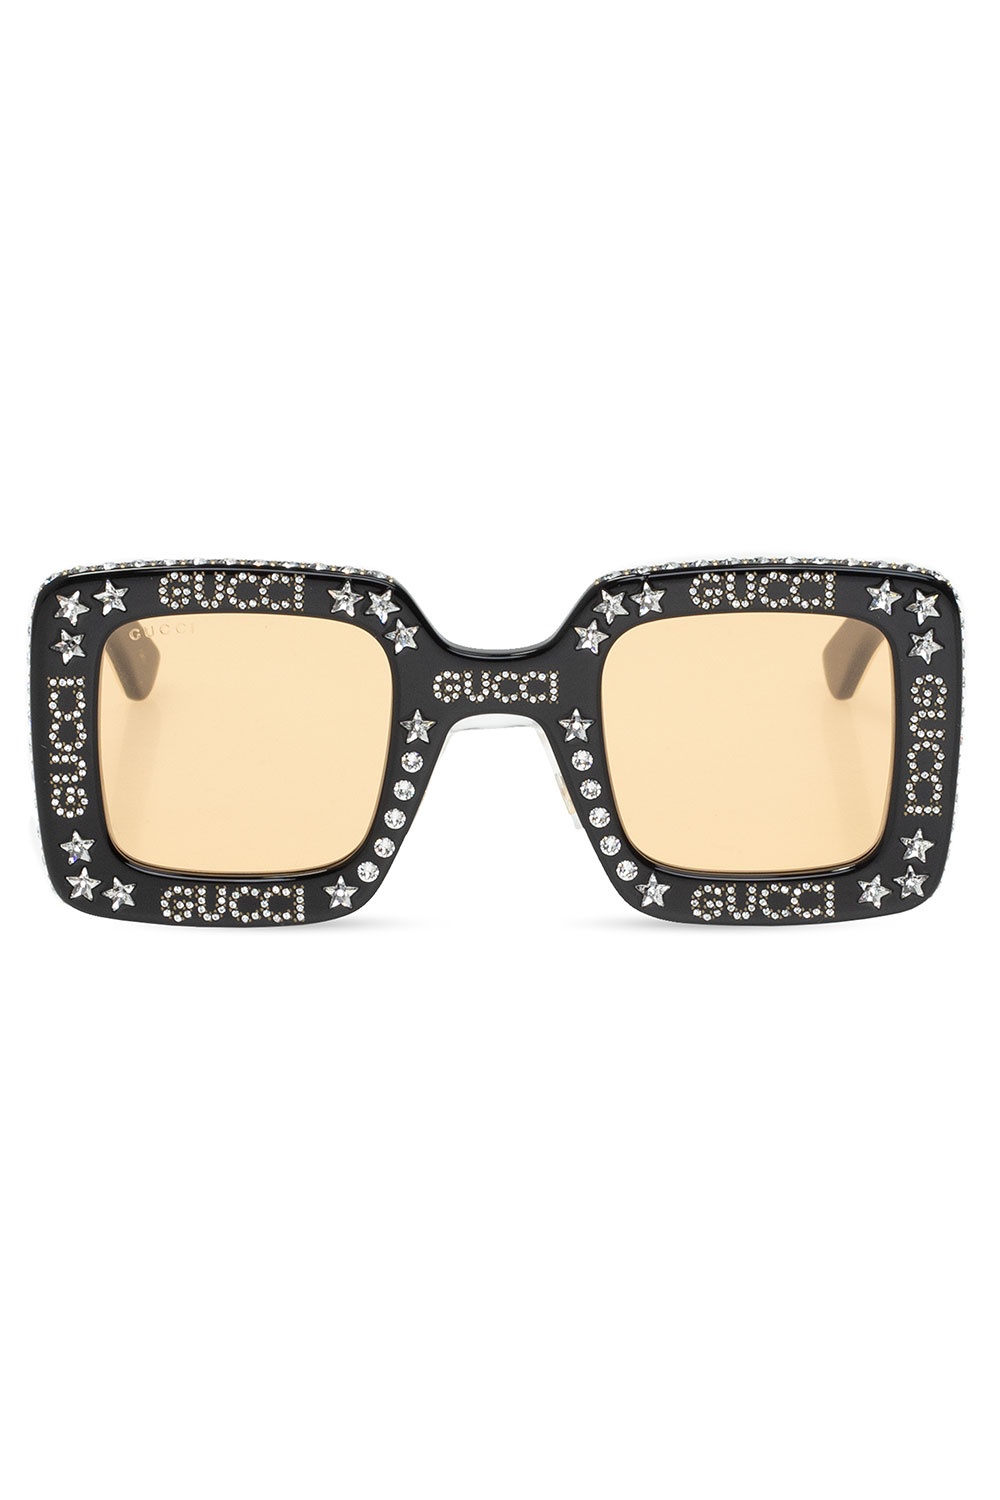 Gucci Bv1195s Gunmetal Sunglasses